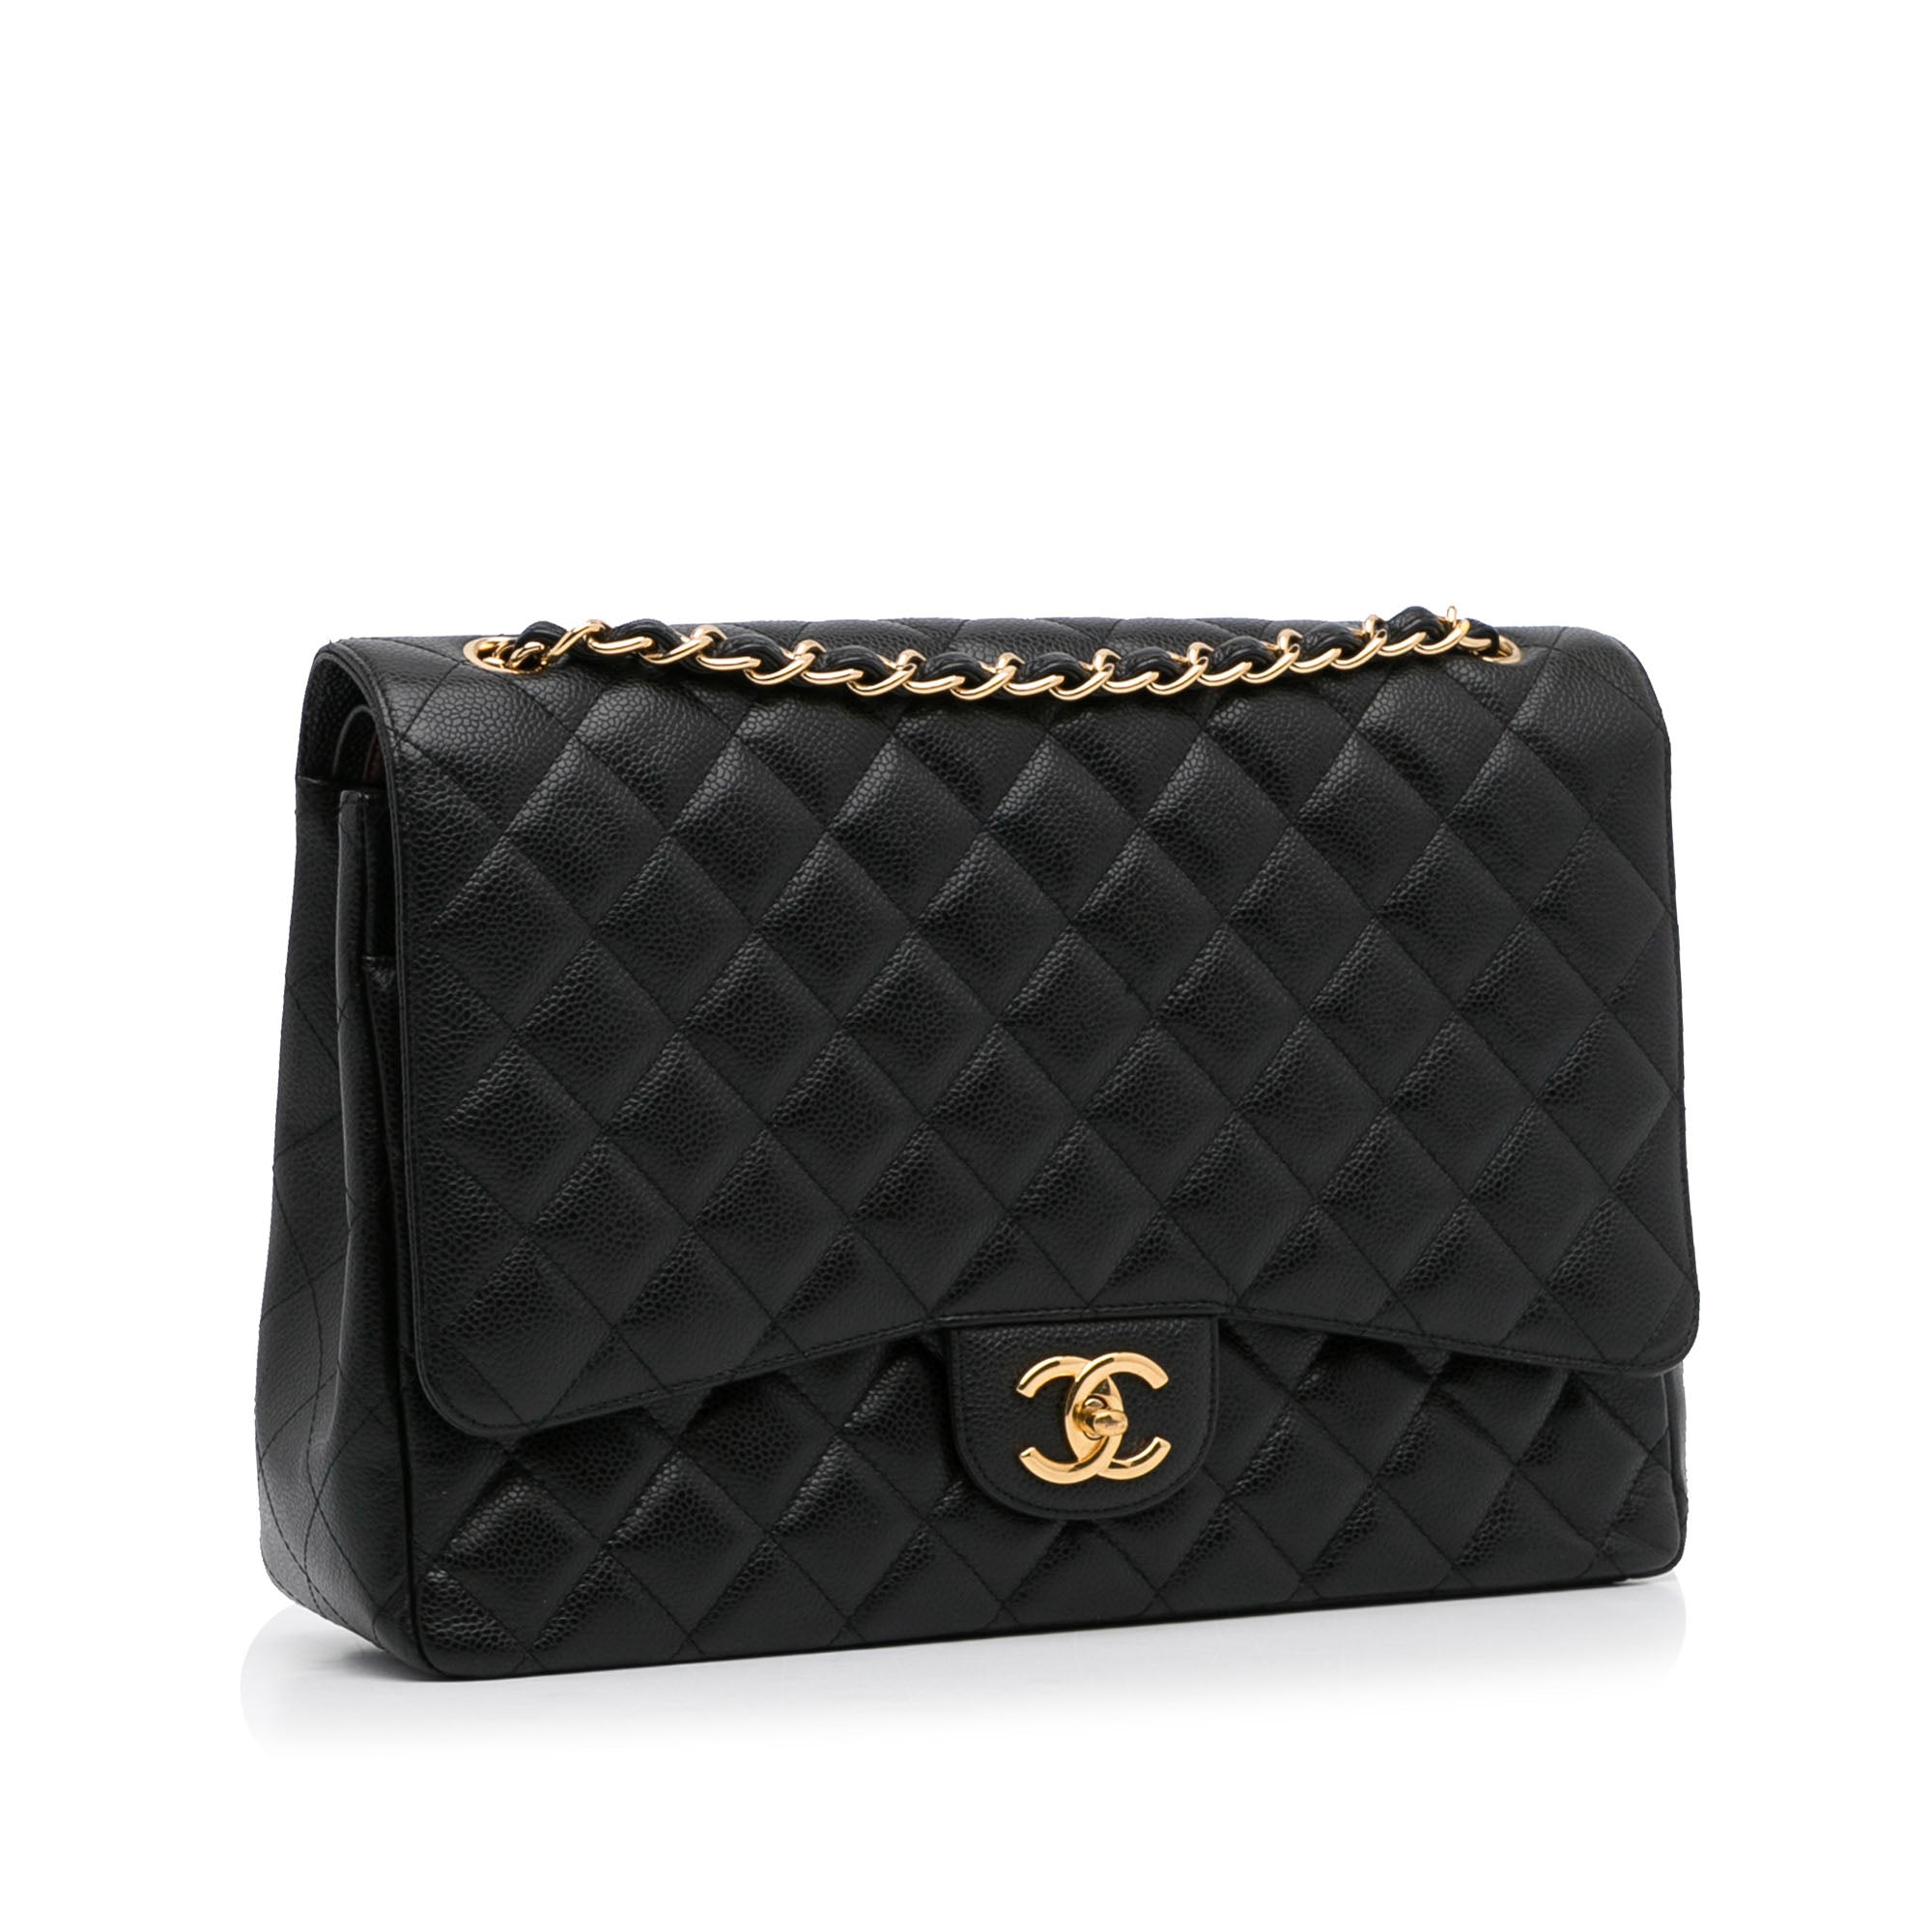 BOSTON Chanel Classic Medium Double Flap, Black Caviar Leather, Gold  Hardware, New in Box